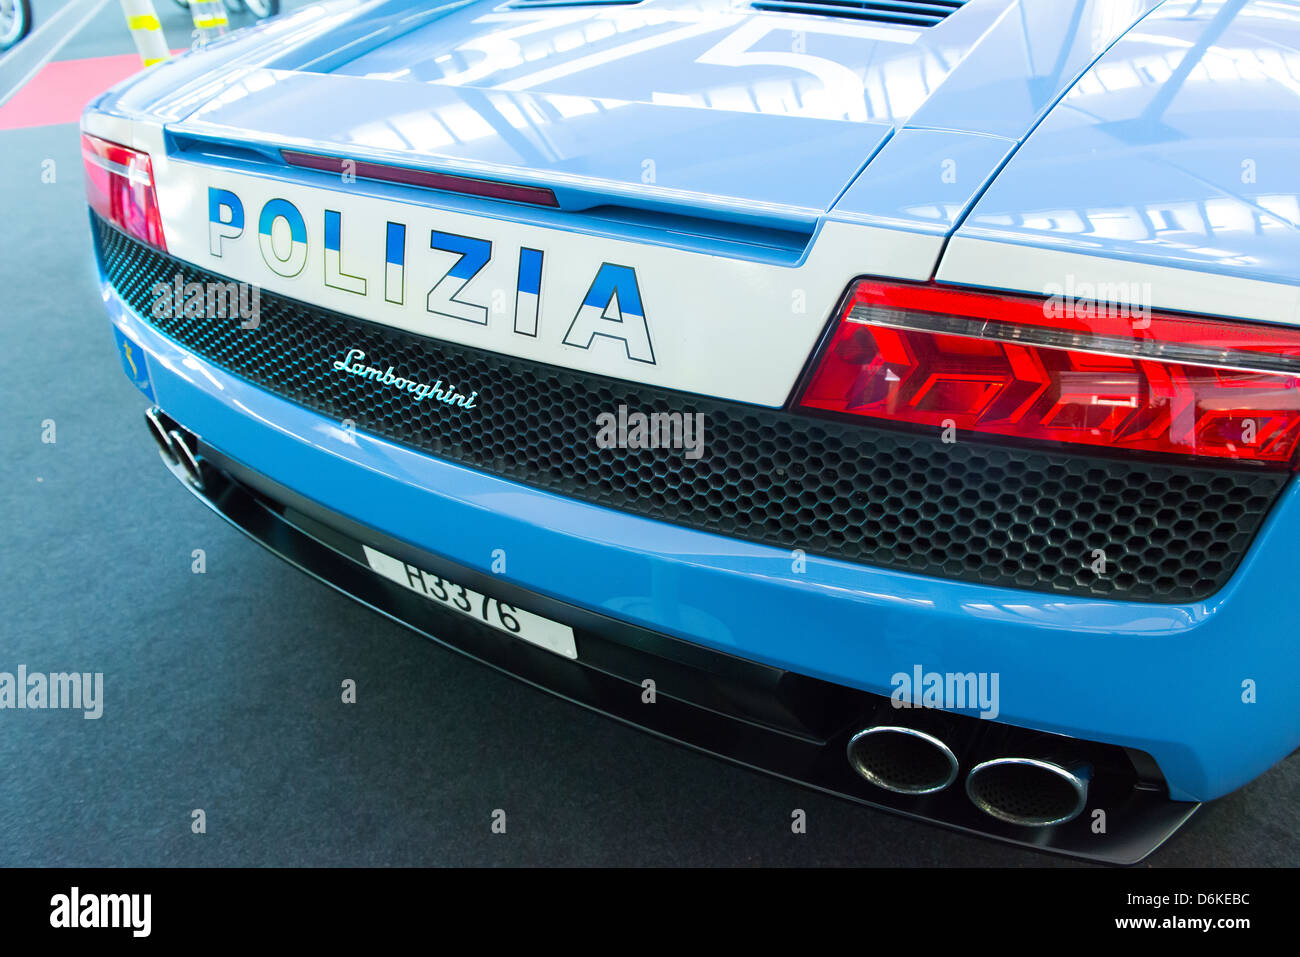 A view of Maserati italian police-issue Stock Photo